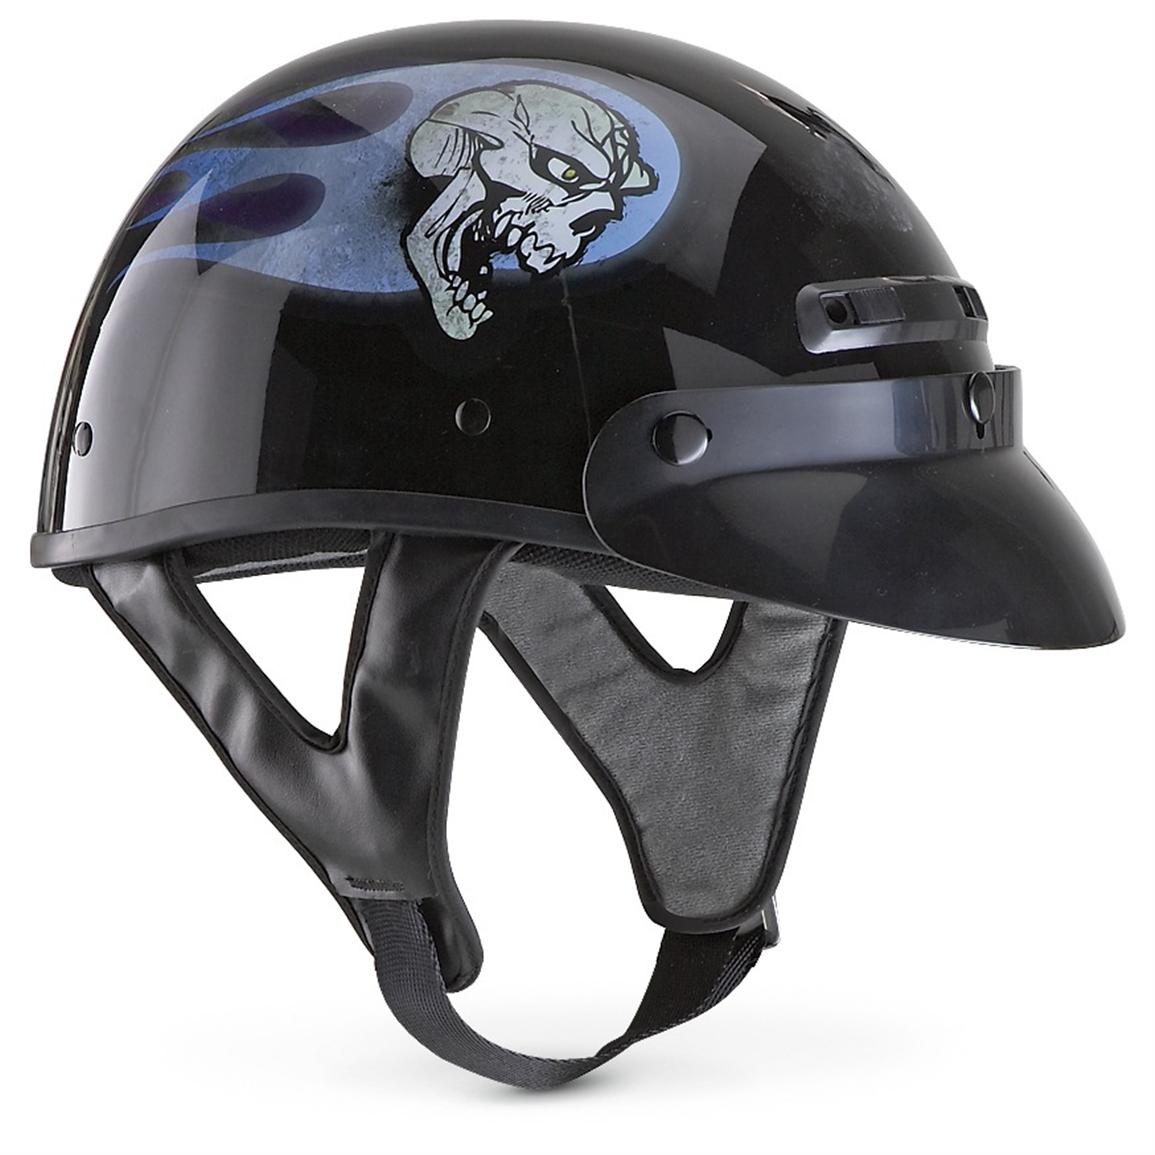 Raider™ Shorty - style Motorcycle Helmet - 202187, Helmets & Goggles at